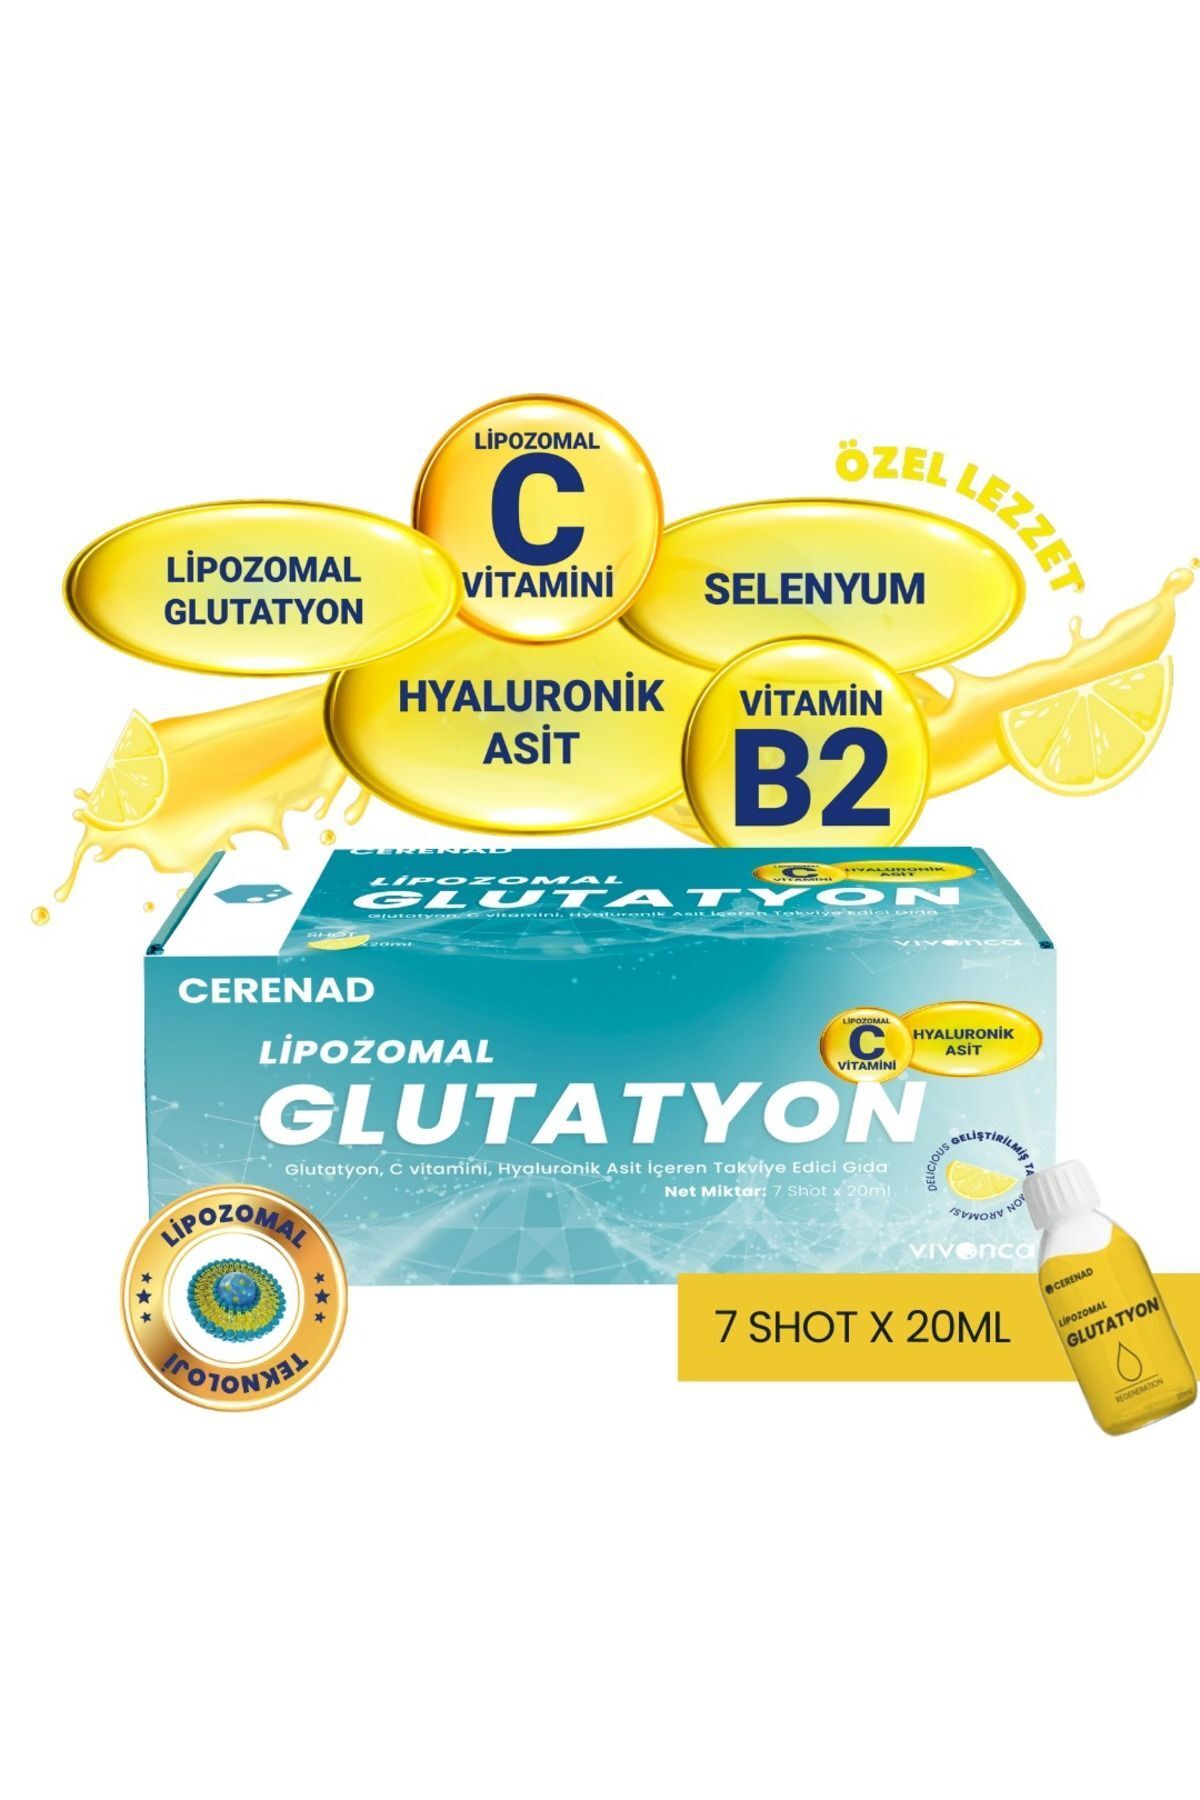 Cerenad Glutatyon, Lipozomal Glutatyon, Lipozomal C Vitamini, Hyaluronik Asit 20ml X 7 Shot Içilebilir